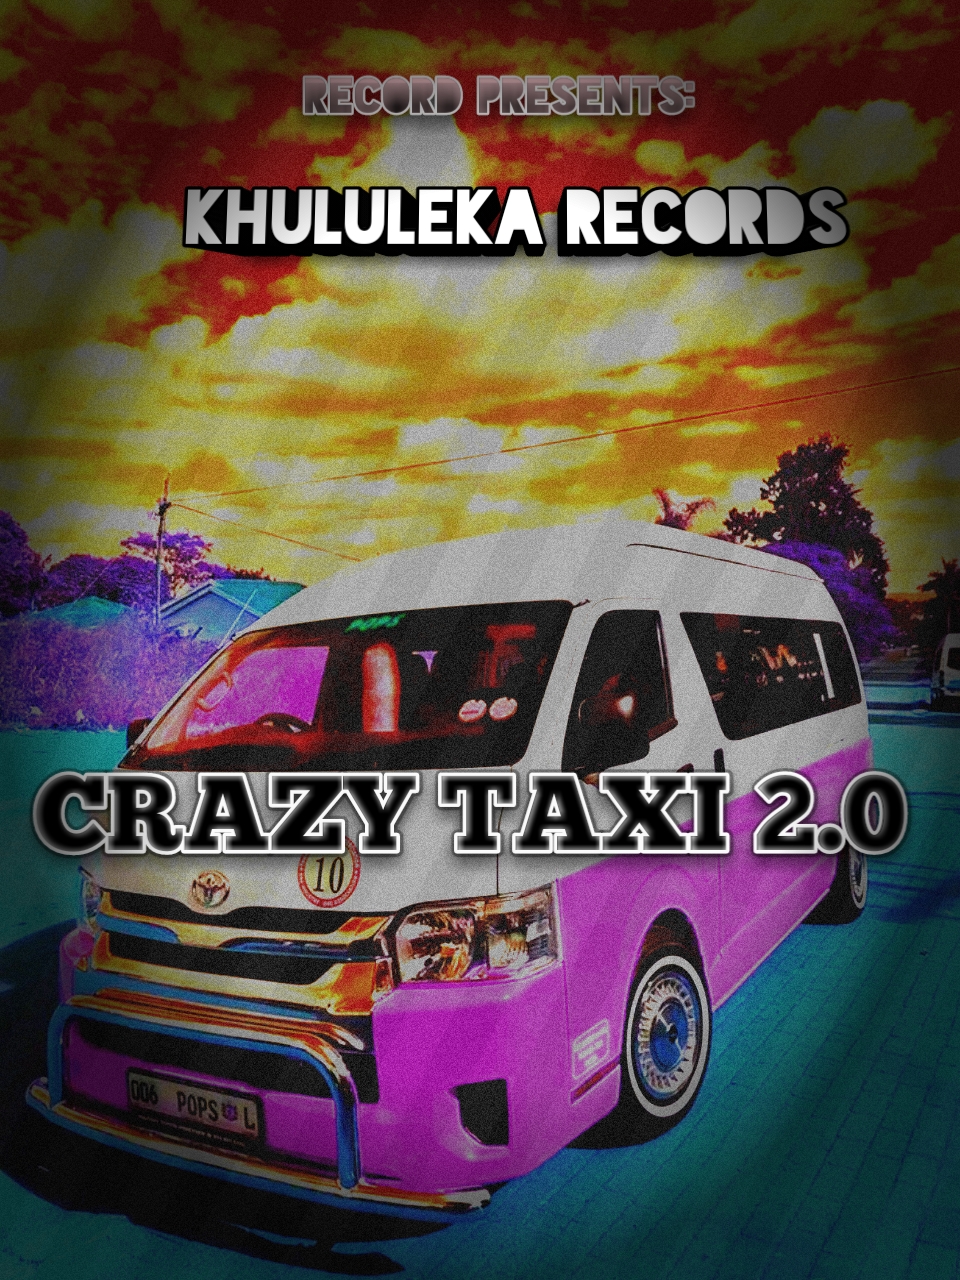 CRAZY TAXI 2.0 - Khululeka Records